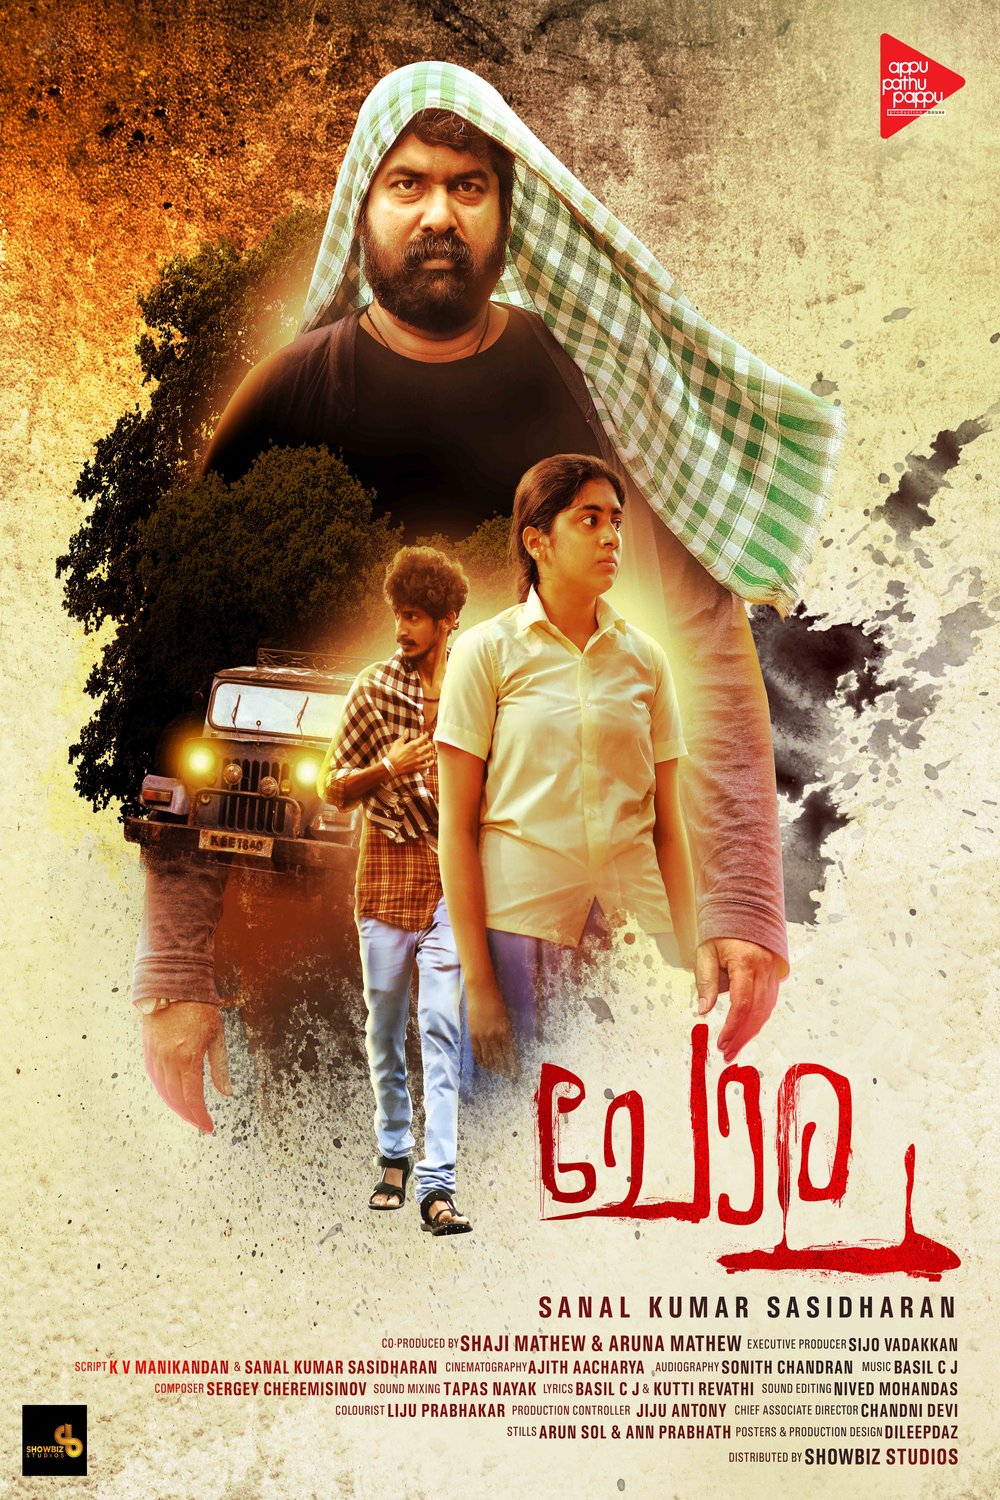 Malayalam poster of the movie Chola